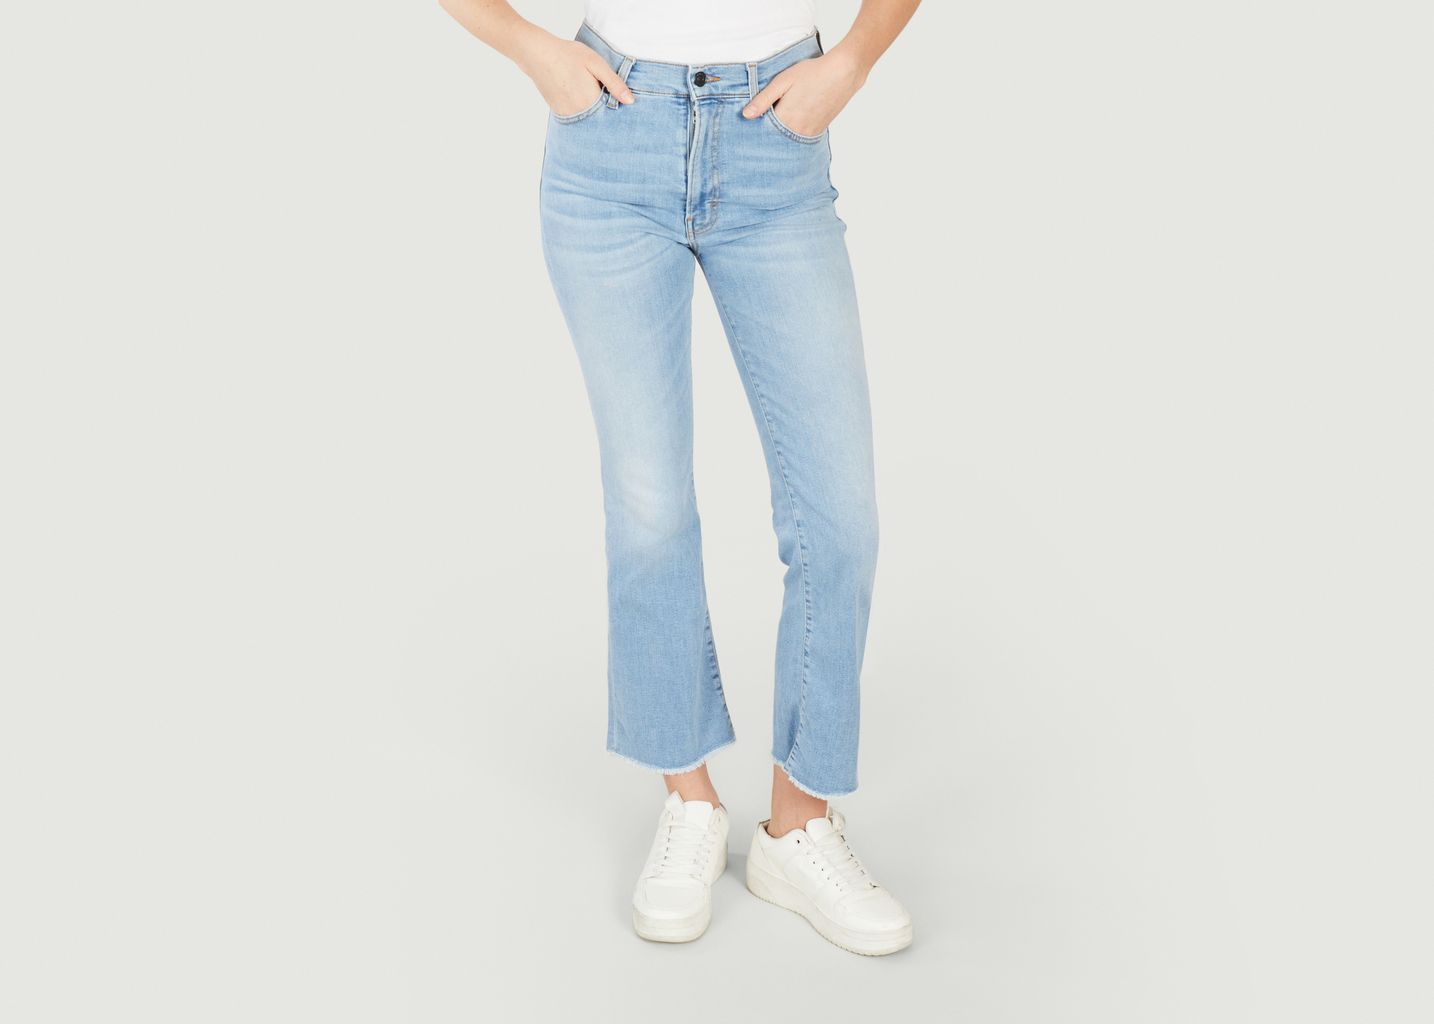 Formentera jeans - haikure